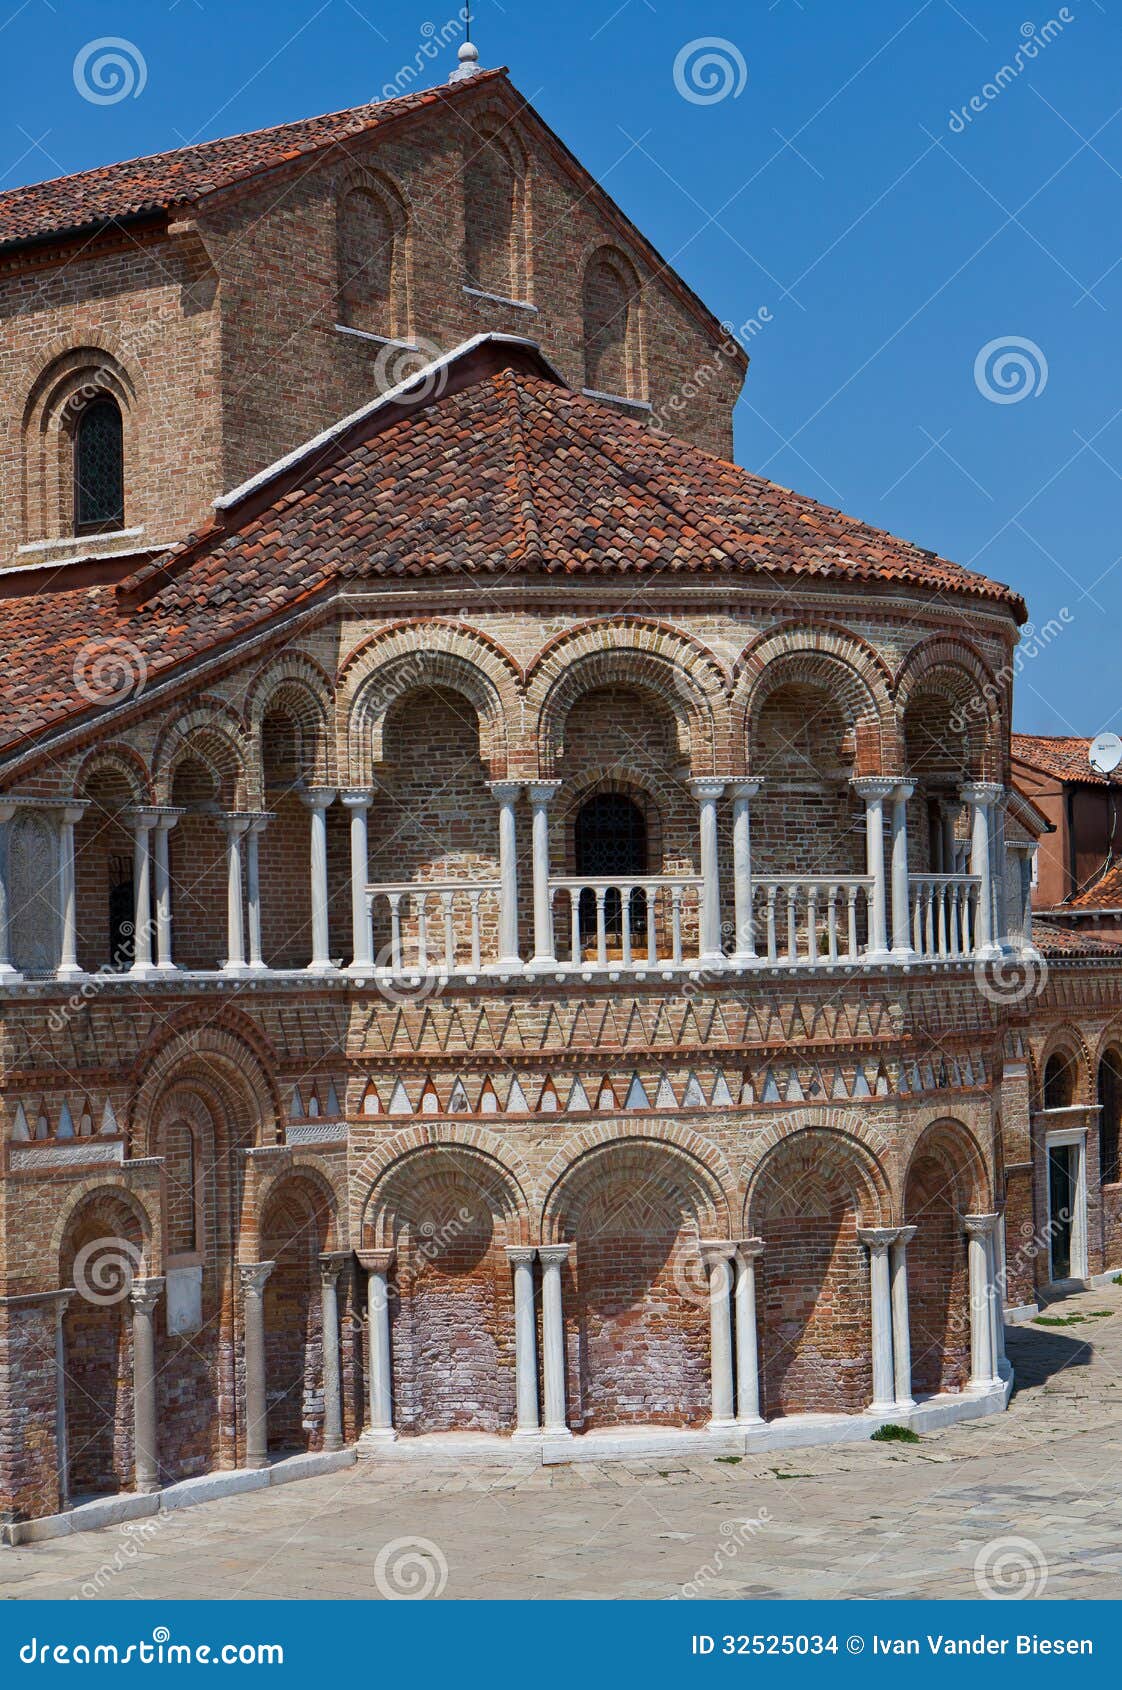 east side of the santa maria e donato church of murano, italy